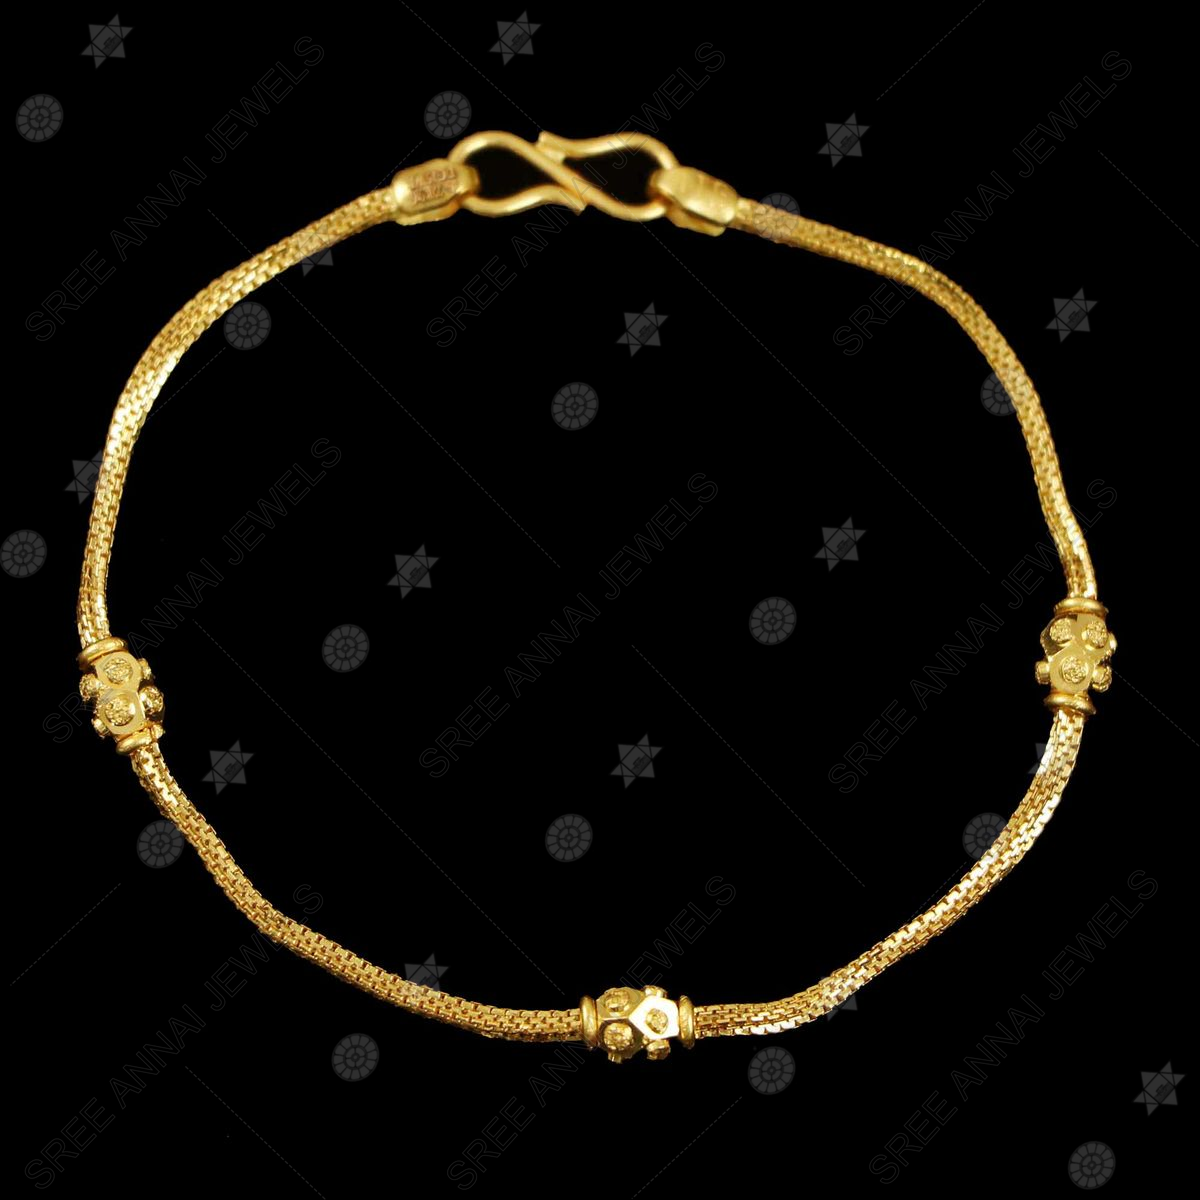 22K Gold Ladies Charm Bracelet - BrLa18631 - 22K Yellow Gold Fancy Bracelet  designed with small charm hangings in shine finish.